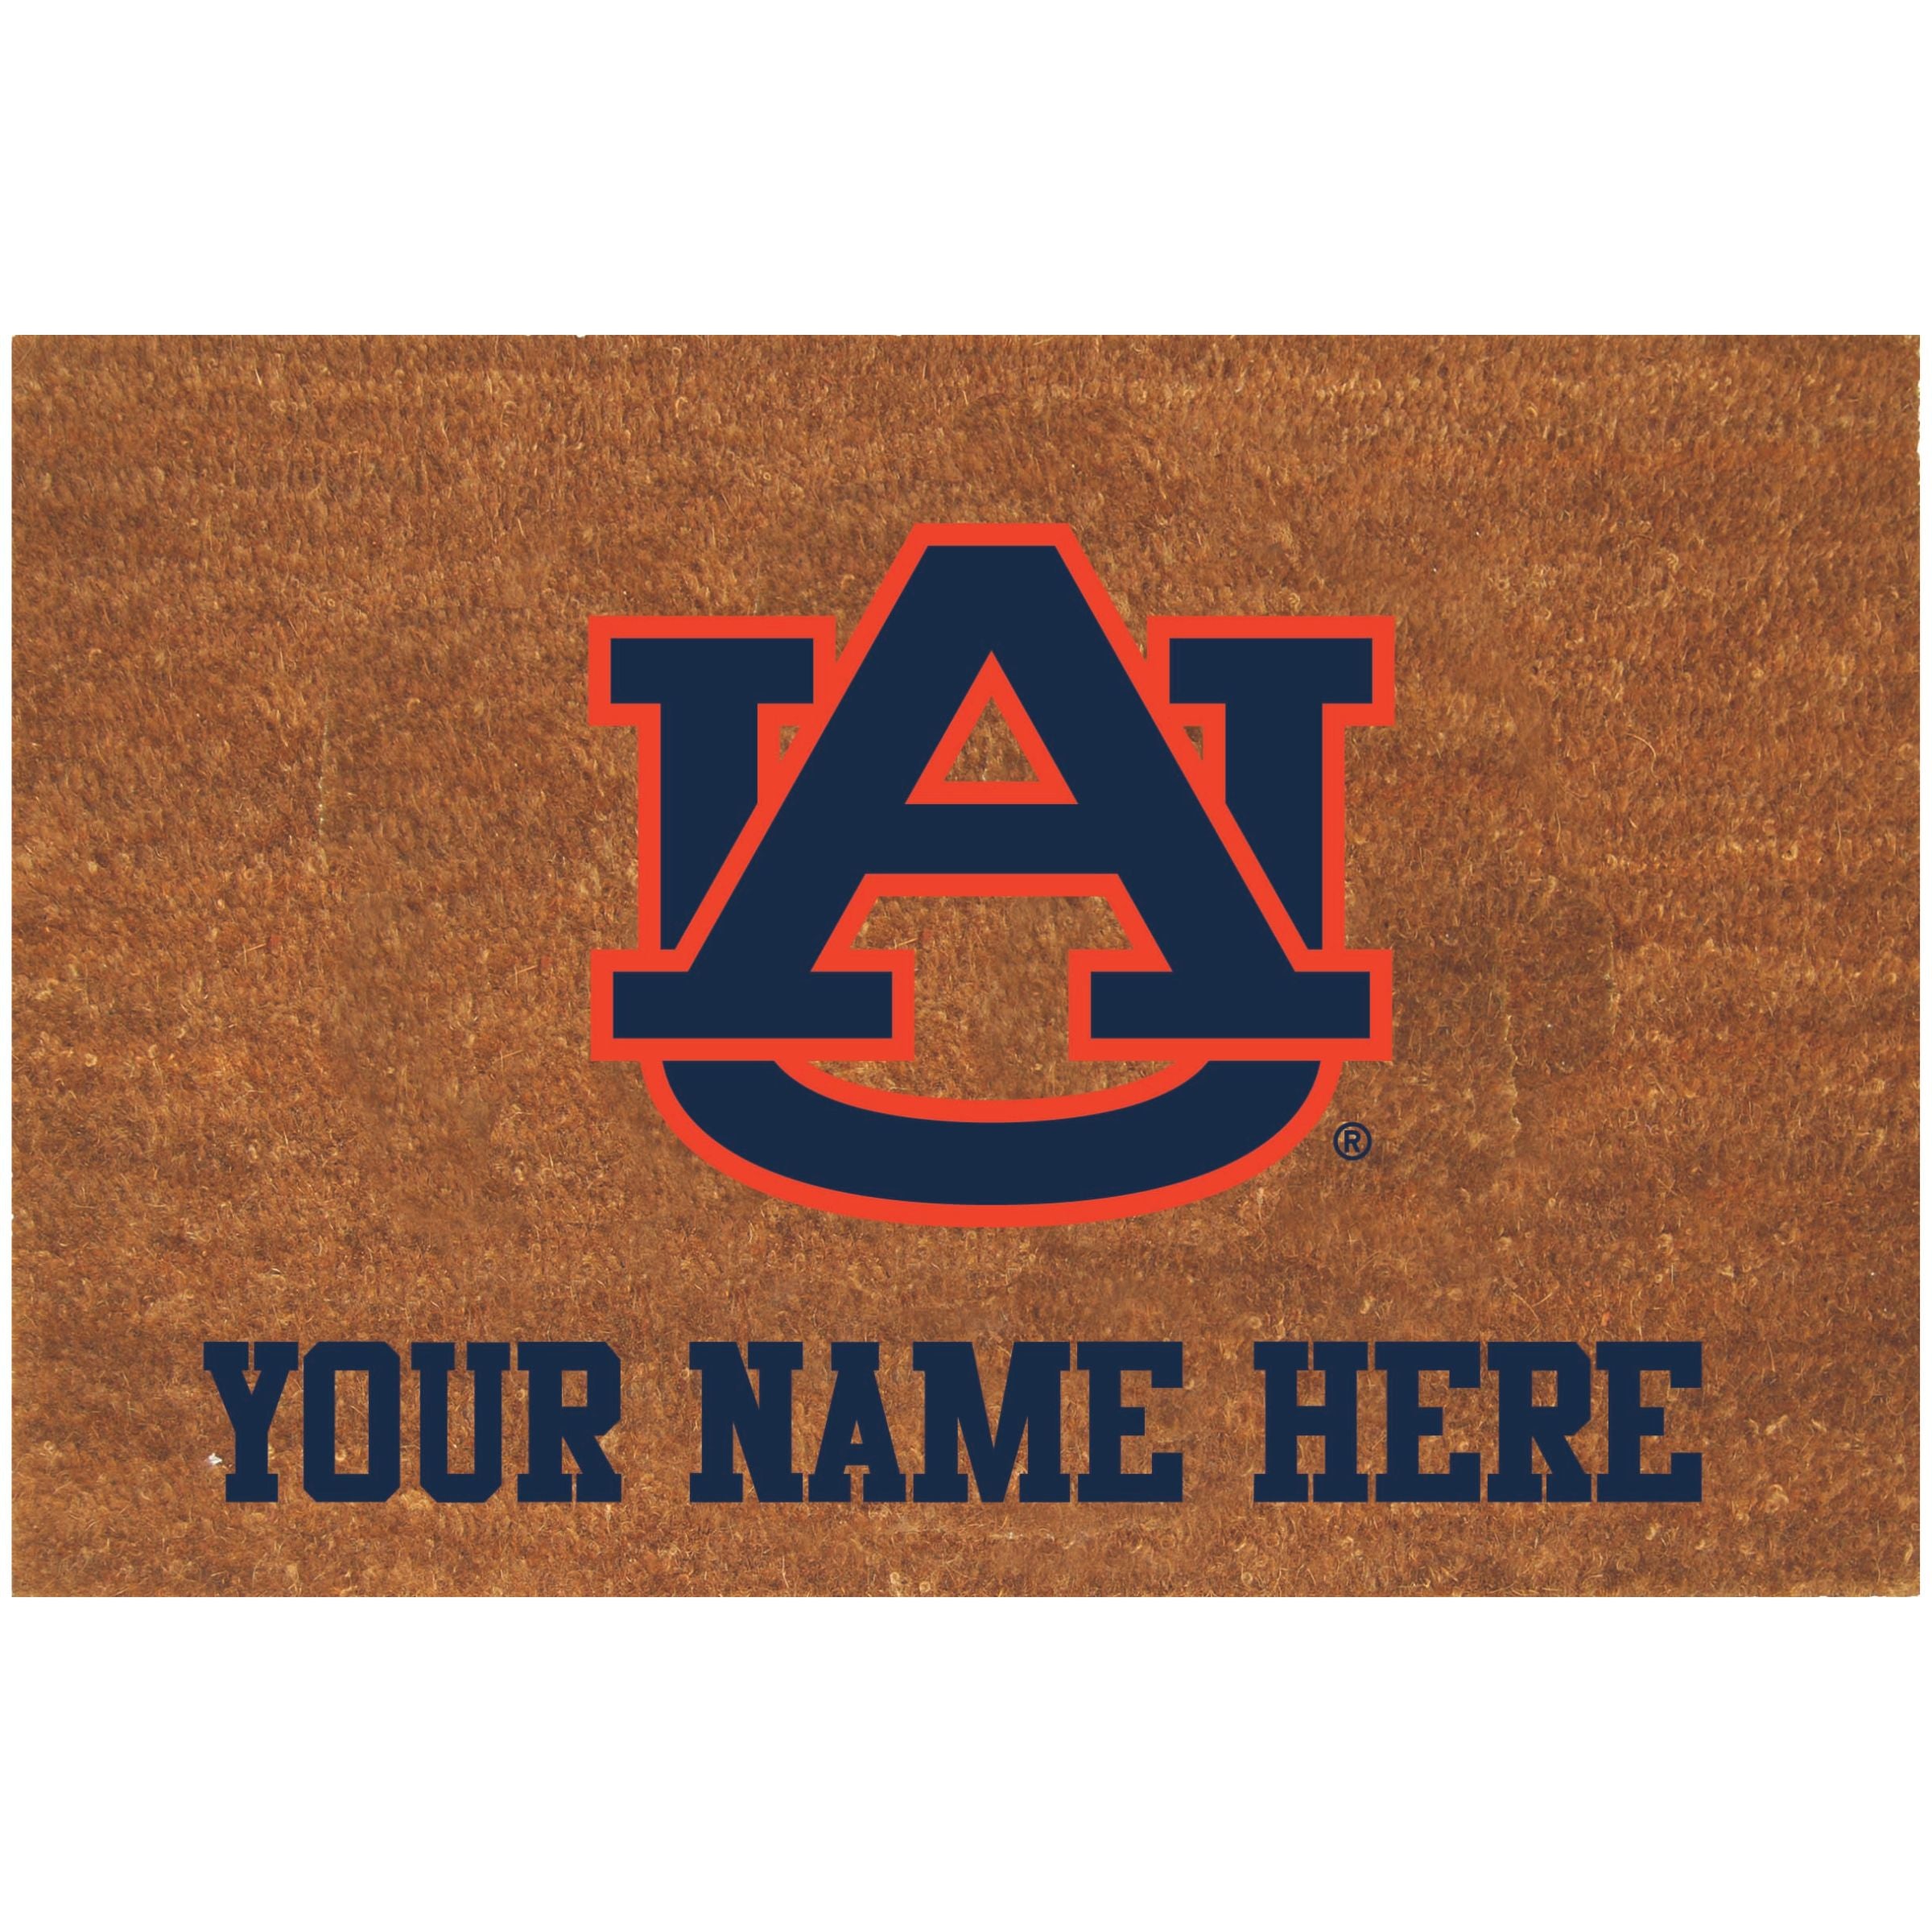 Personalized Doormat | Auburn Tigers